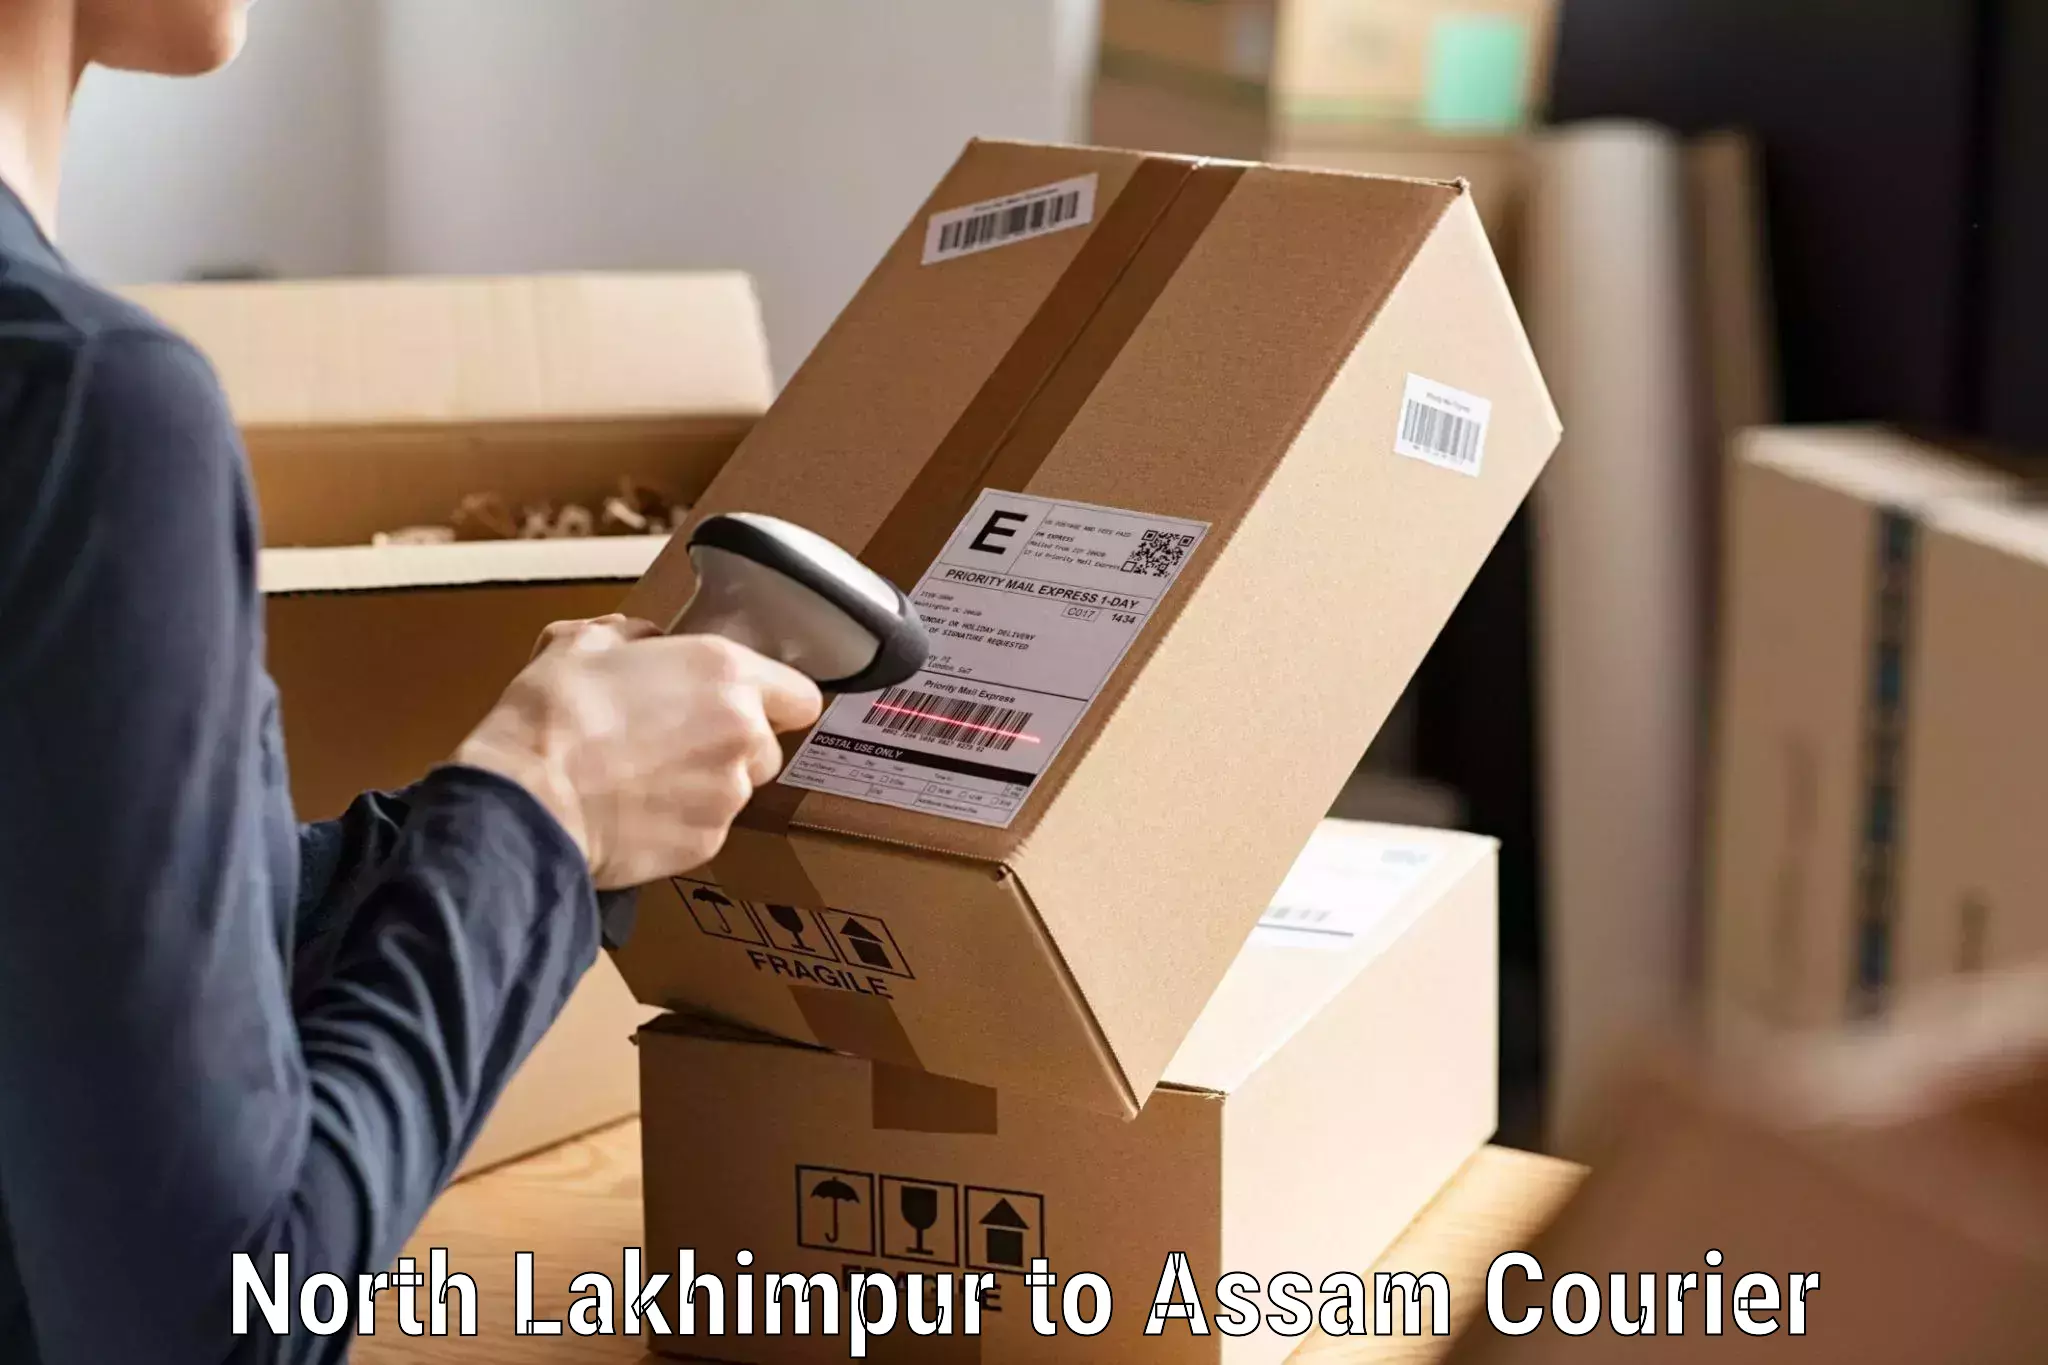 Courier service innovation North Lakhimpur to Sadiya